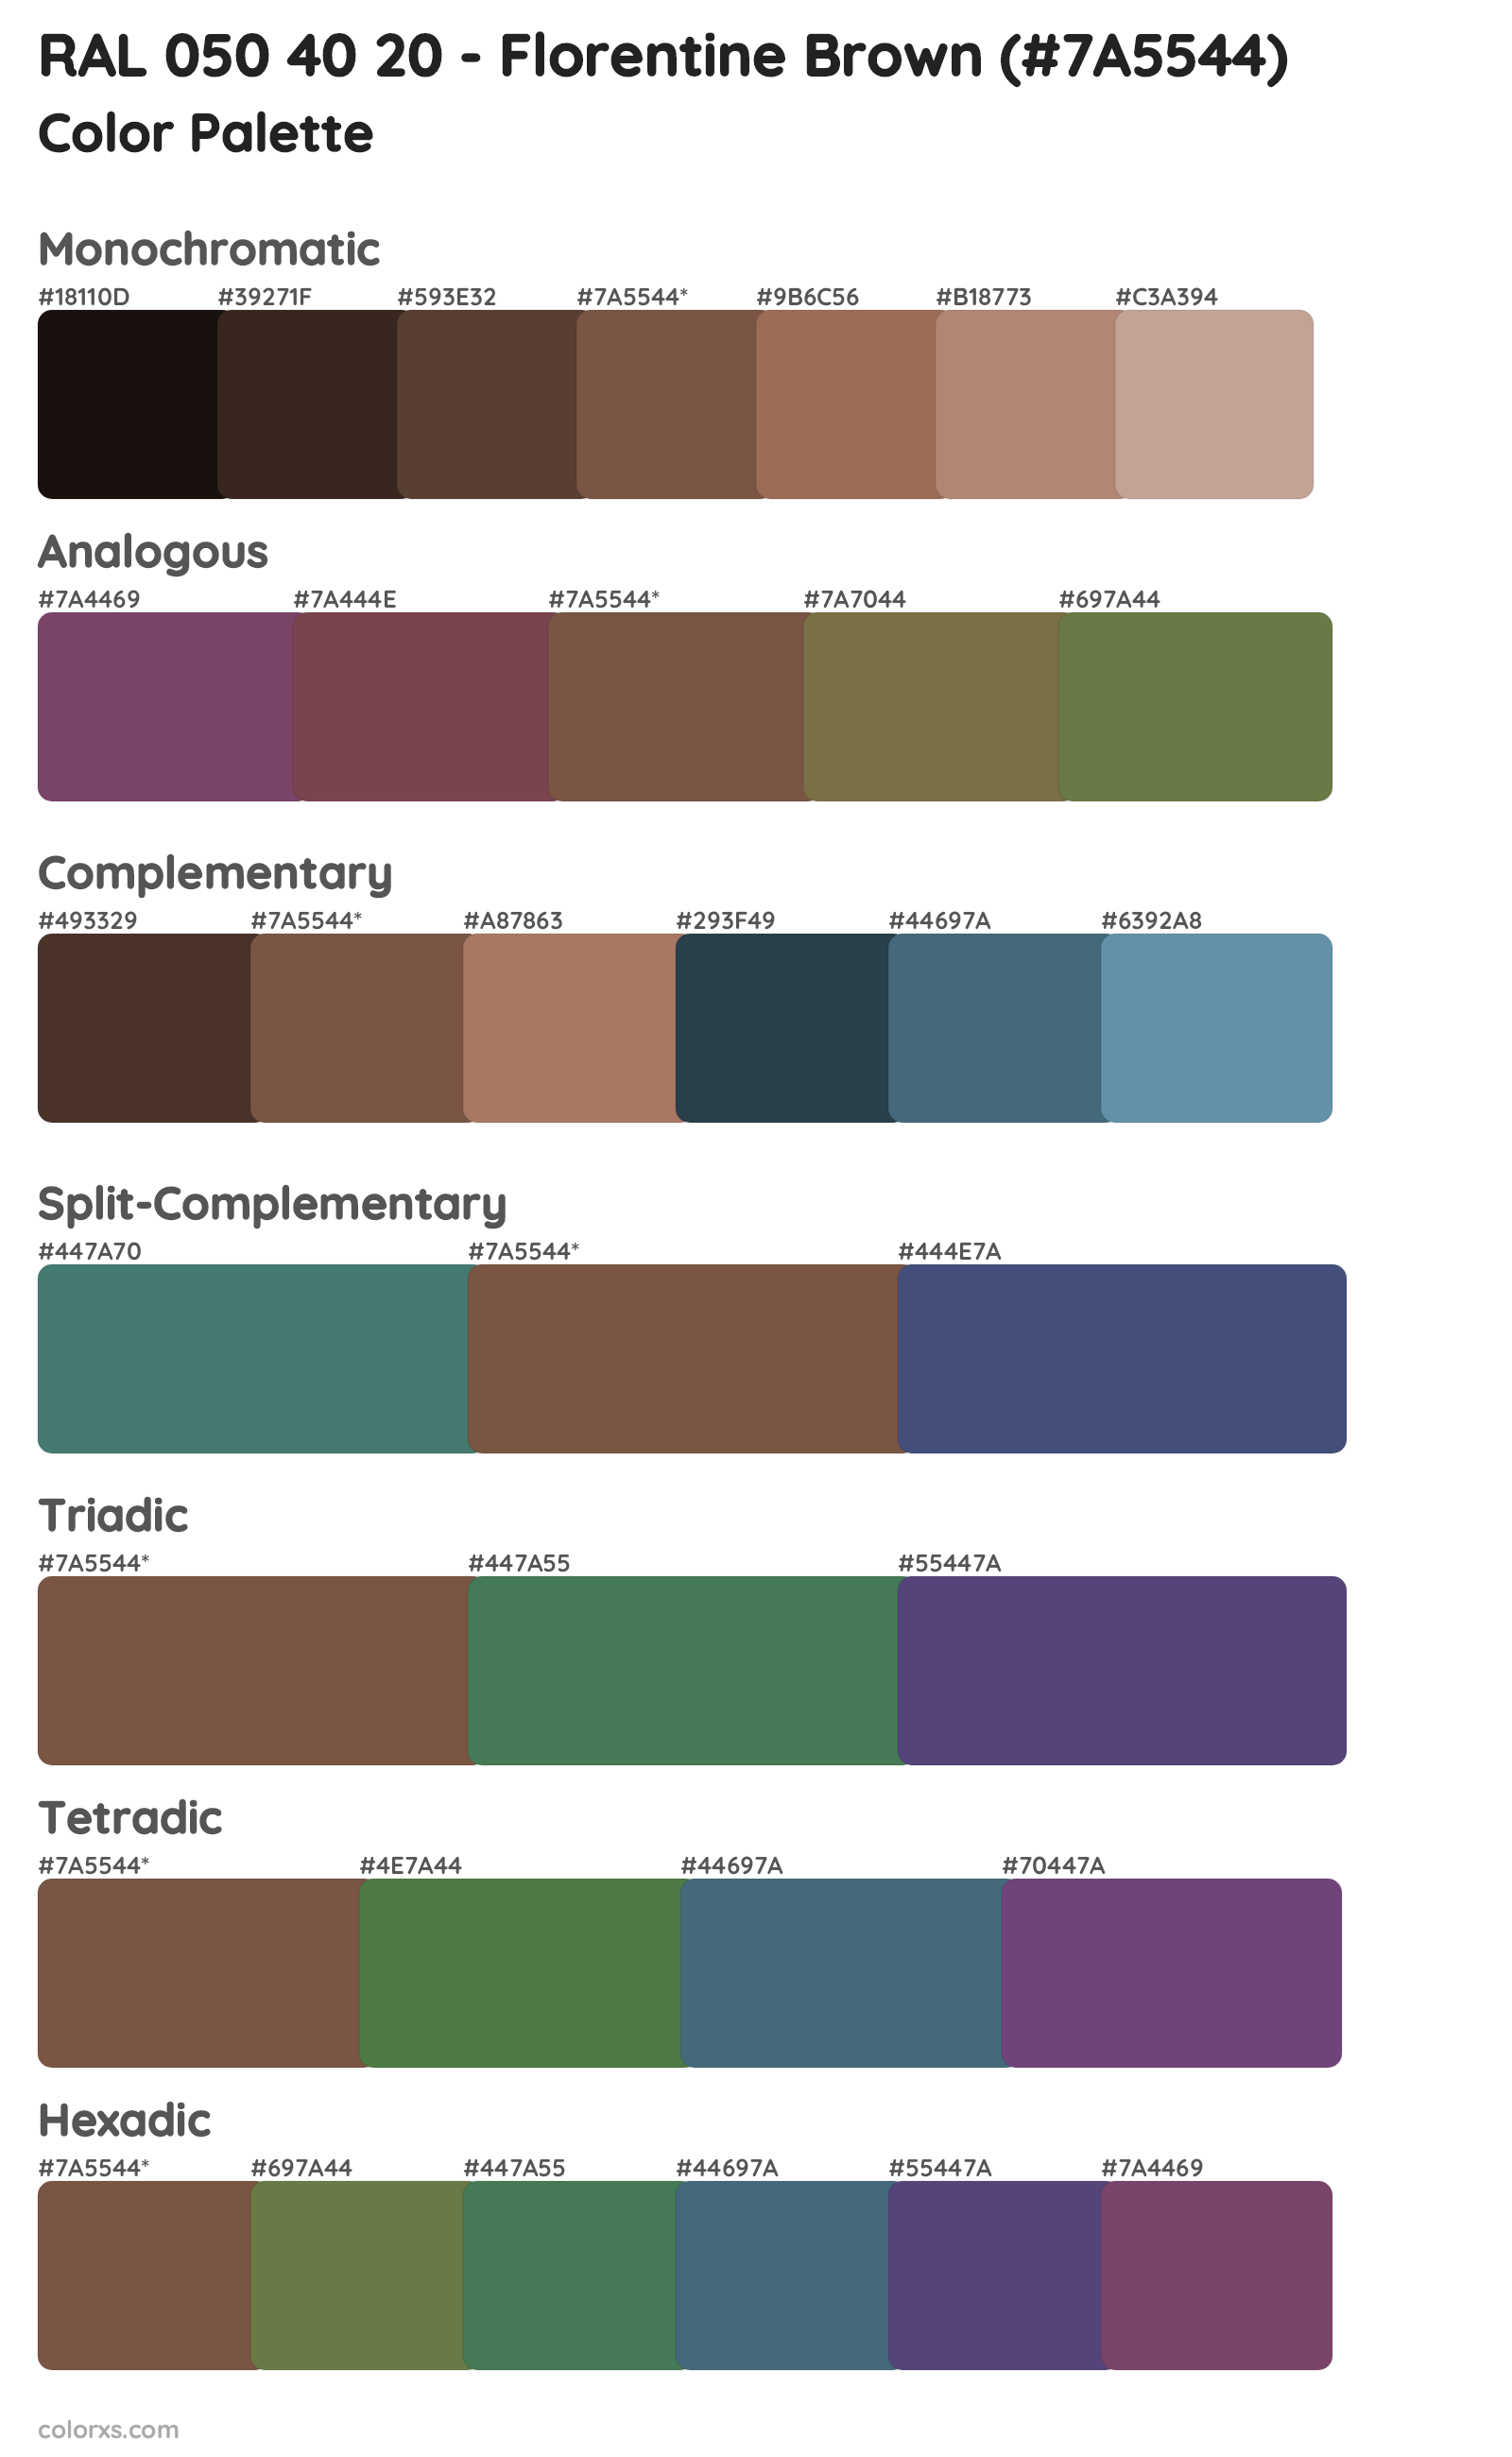 RAL 050 40 20 - Florentine Brown Color Scheme Palettes